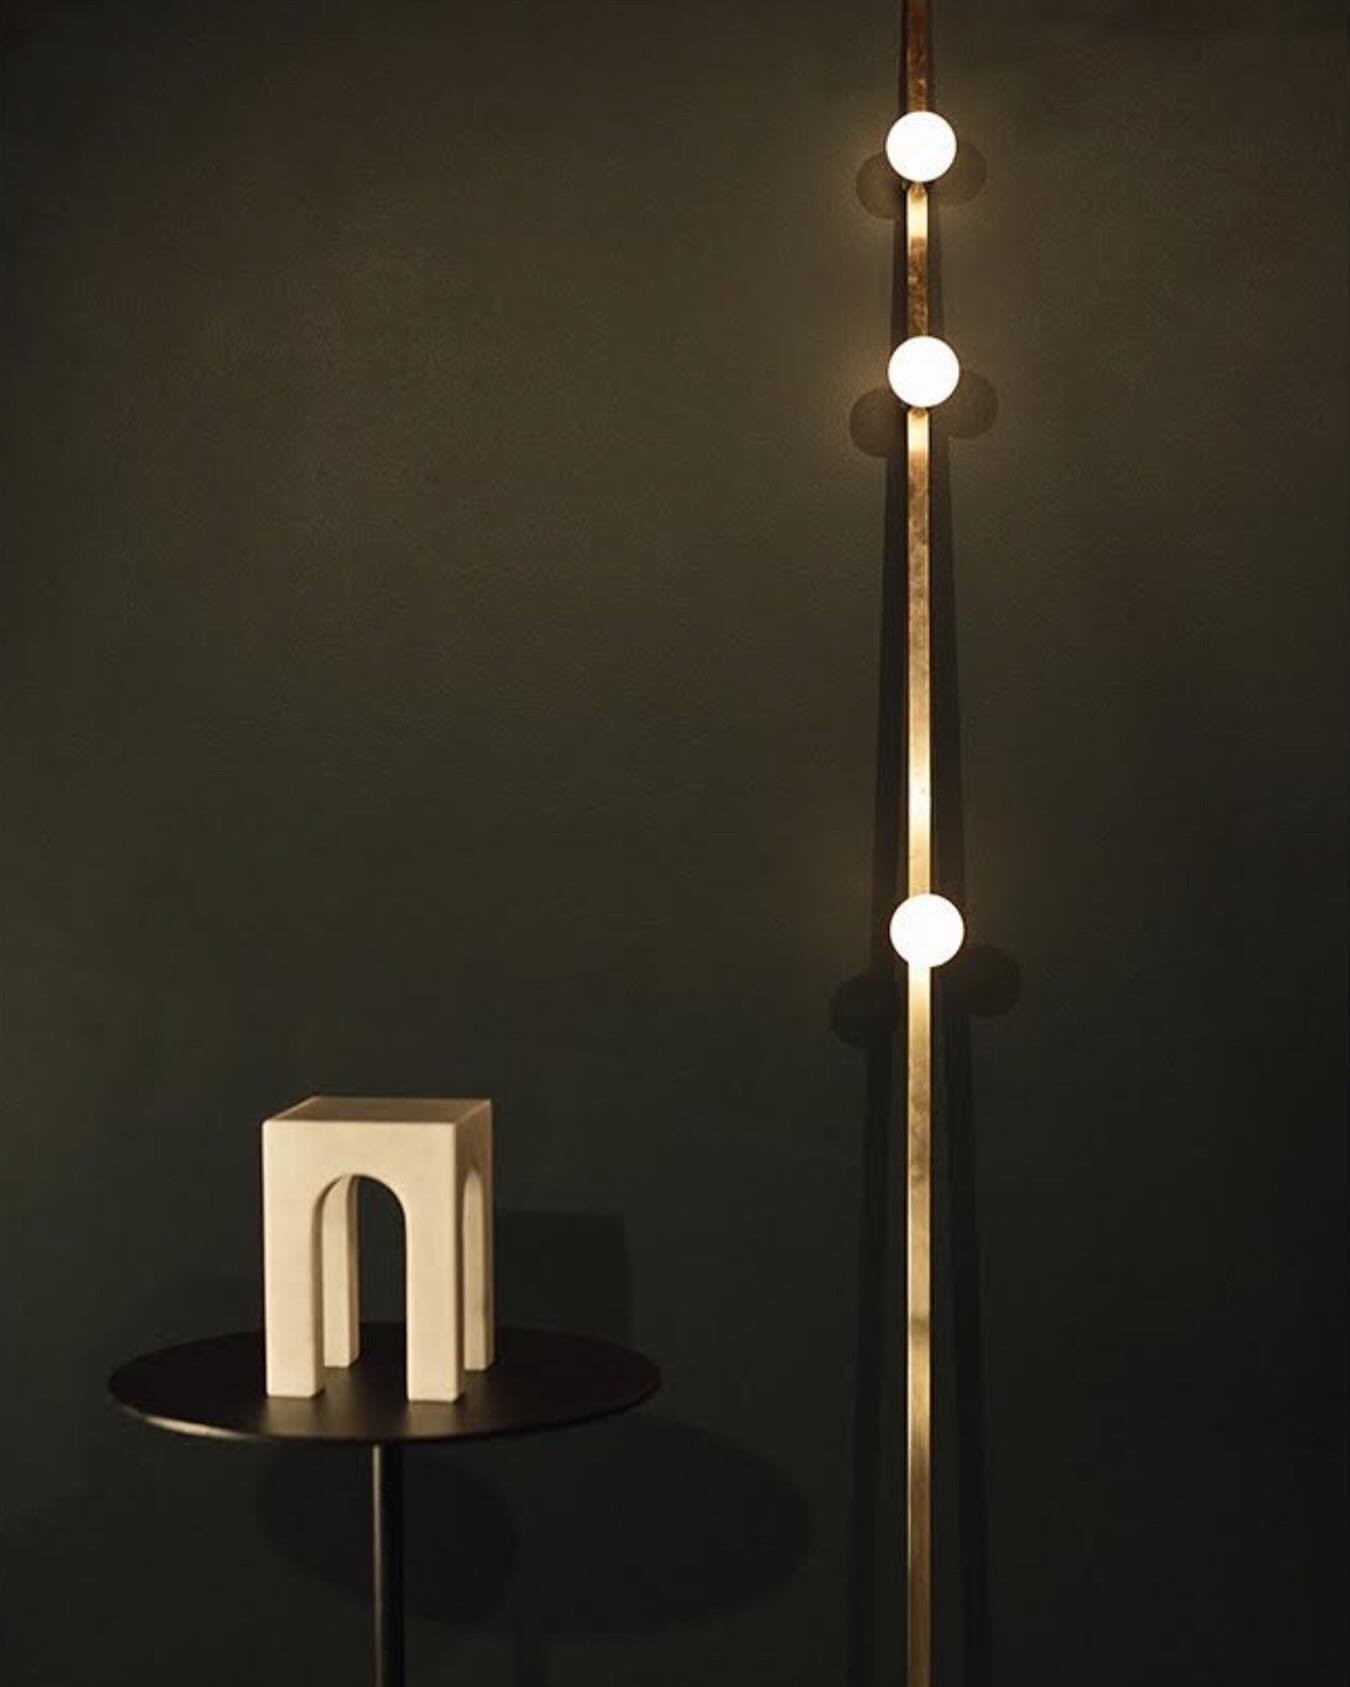 The Dot Floor Lamp from @LambertetFils
⠀⠀⠀⠀⠀⠀⠀⠀⠀
Photography by @alexeitopounov
⠀⠀⠀⠀⠀⠀⠀⠀⠀
#lighting #lightingdesign #canadiandesign #decorativelighting #furniture #interiordesign #design #architects #archilovers #midcentury #midcenturymoderndesign #m